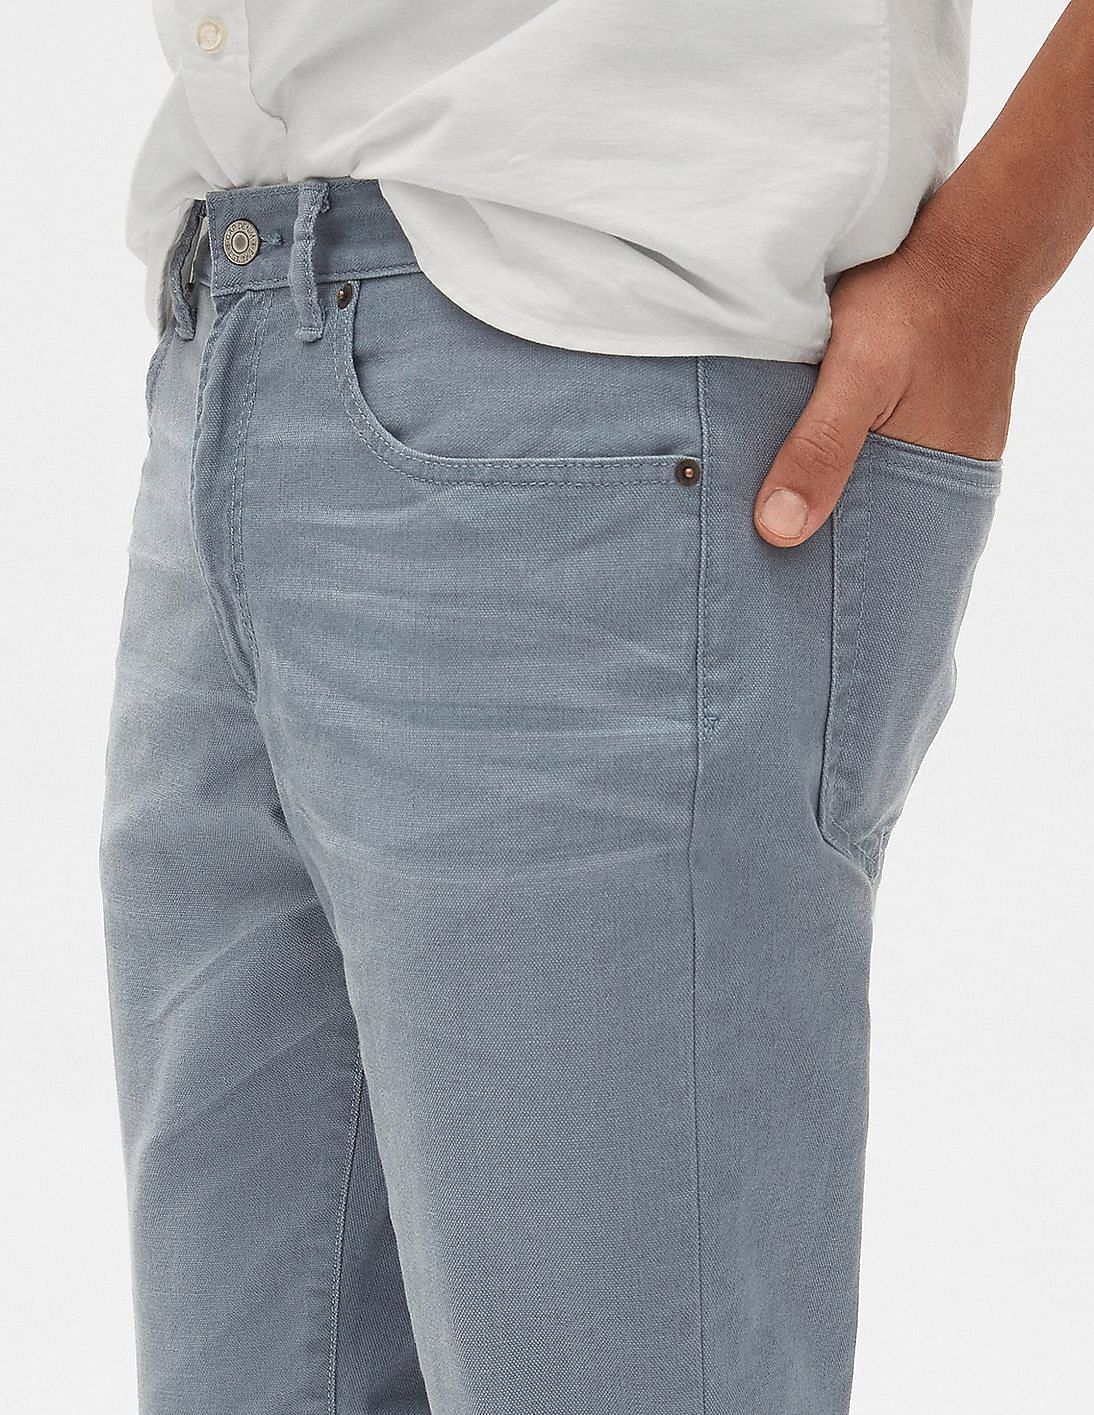 wearlight slim jeans with gapflex